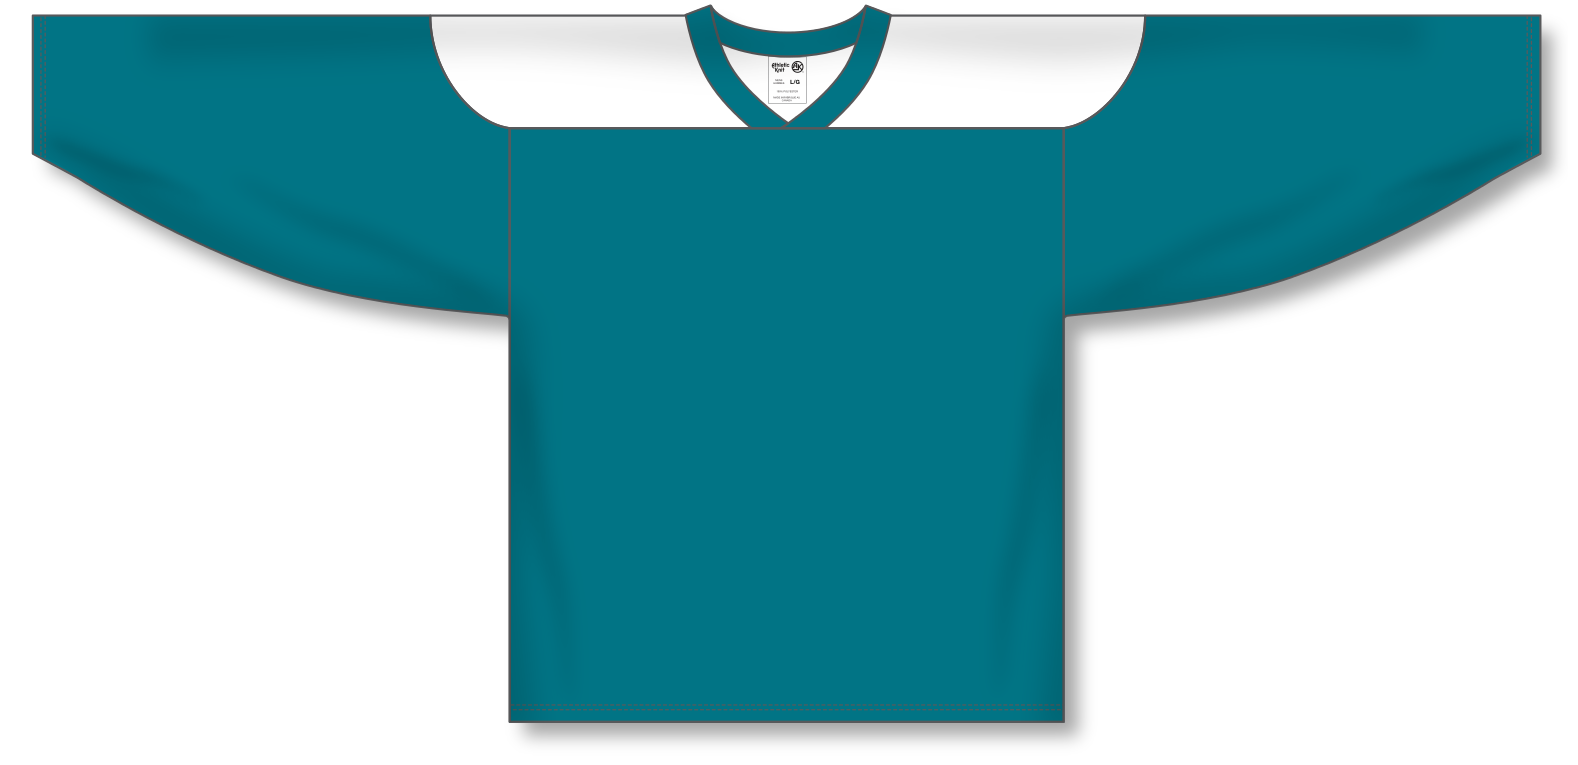 H6100 Custom Practice Hockey Jerseys